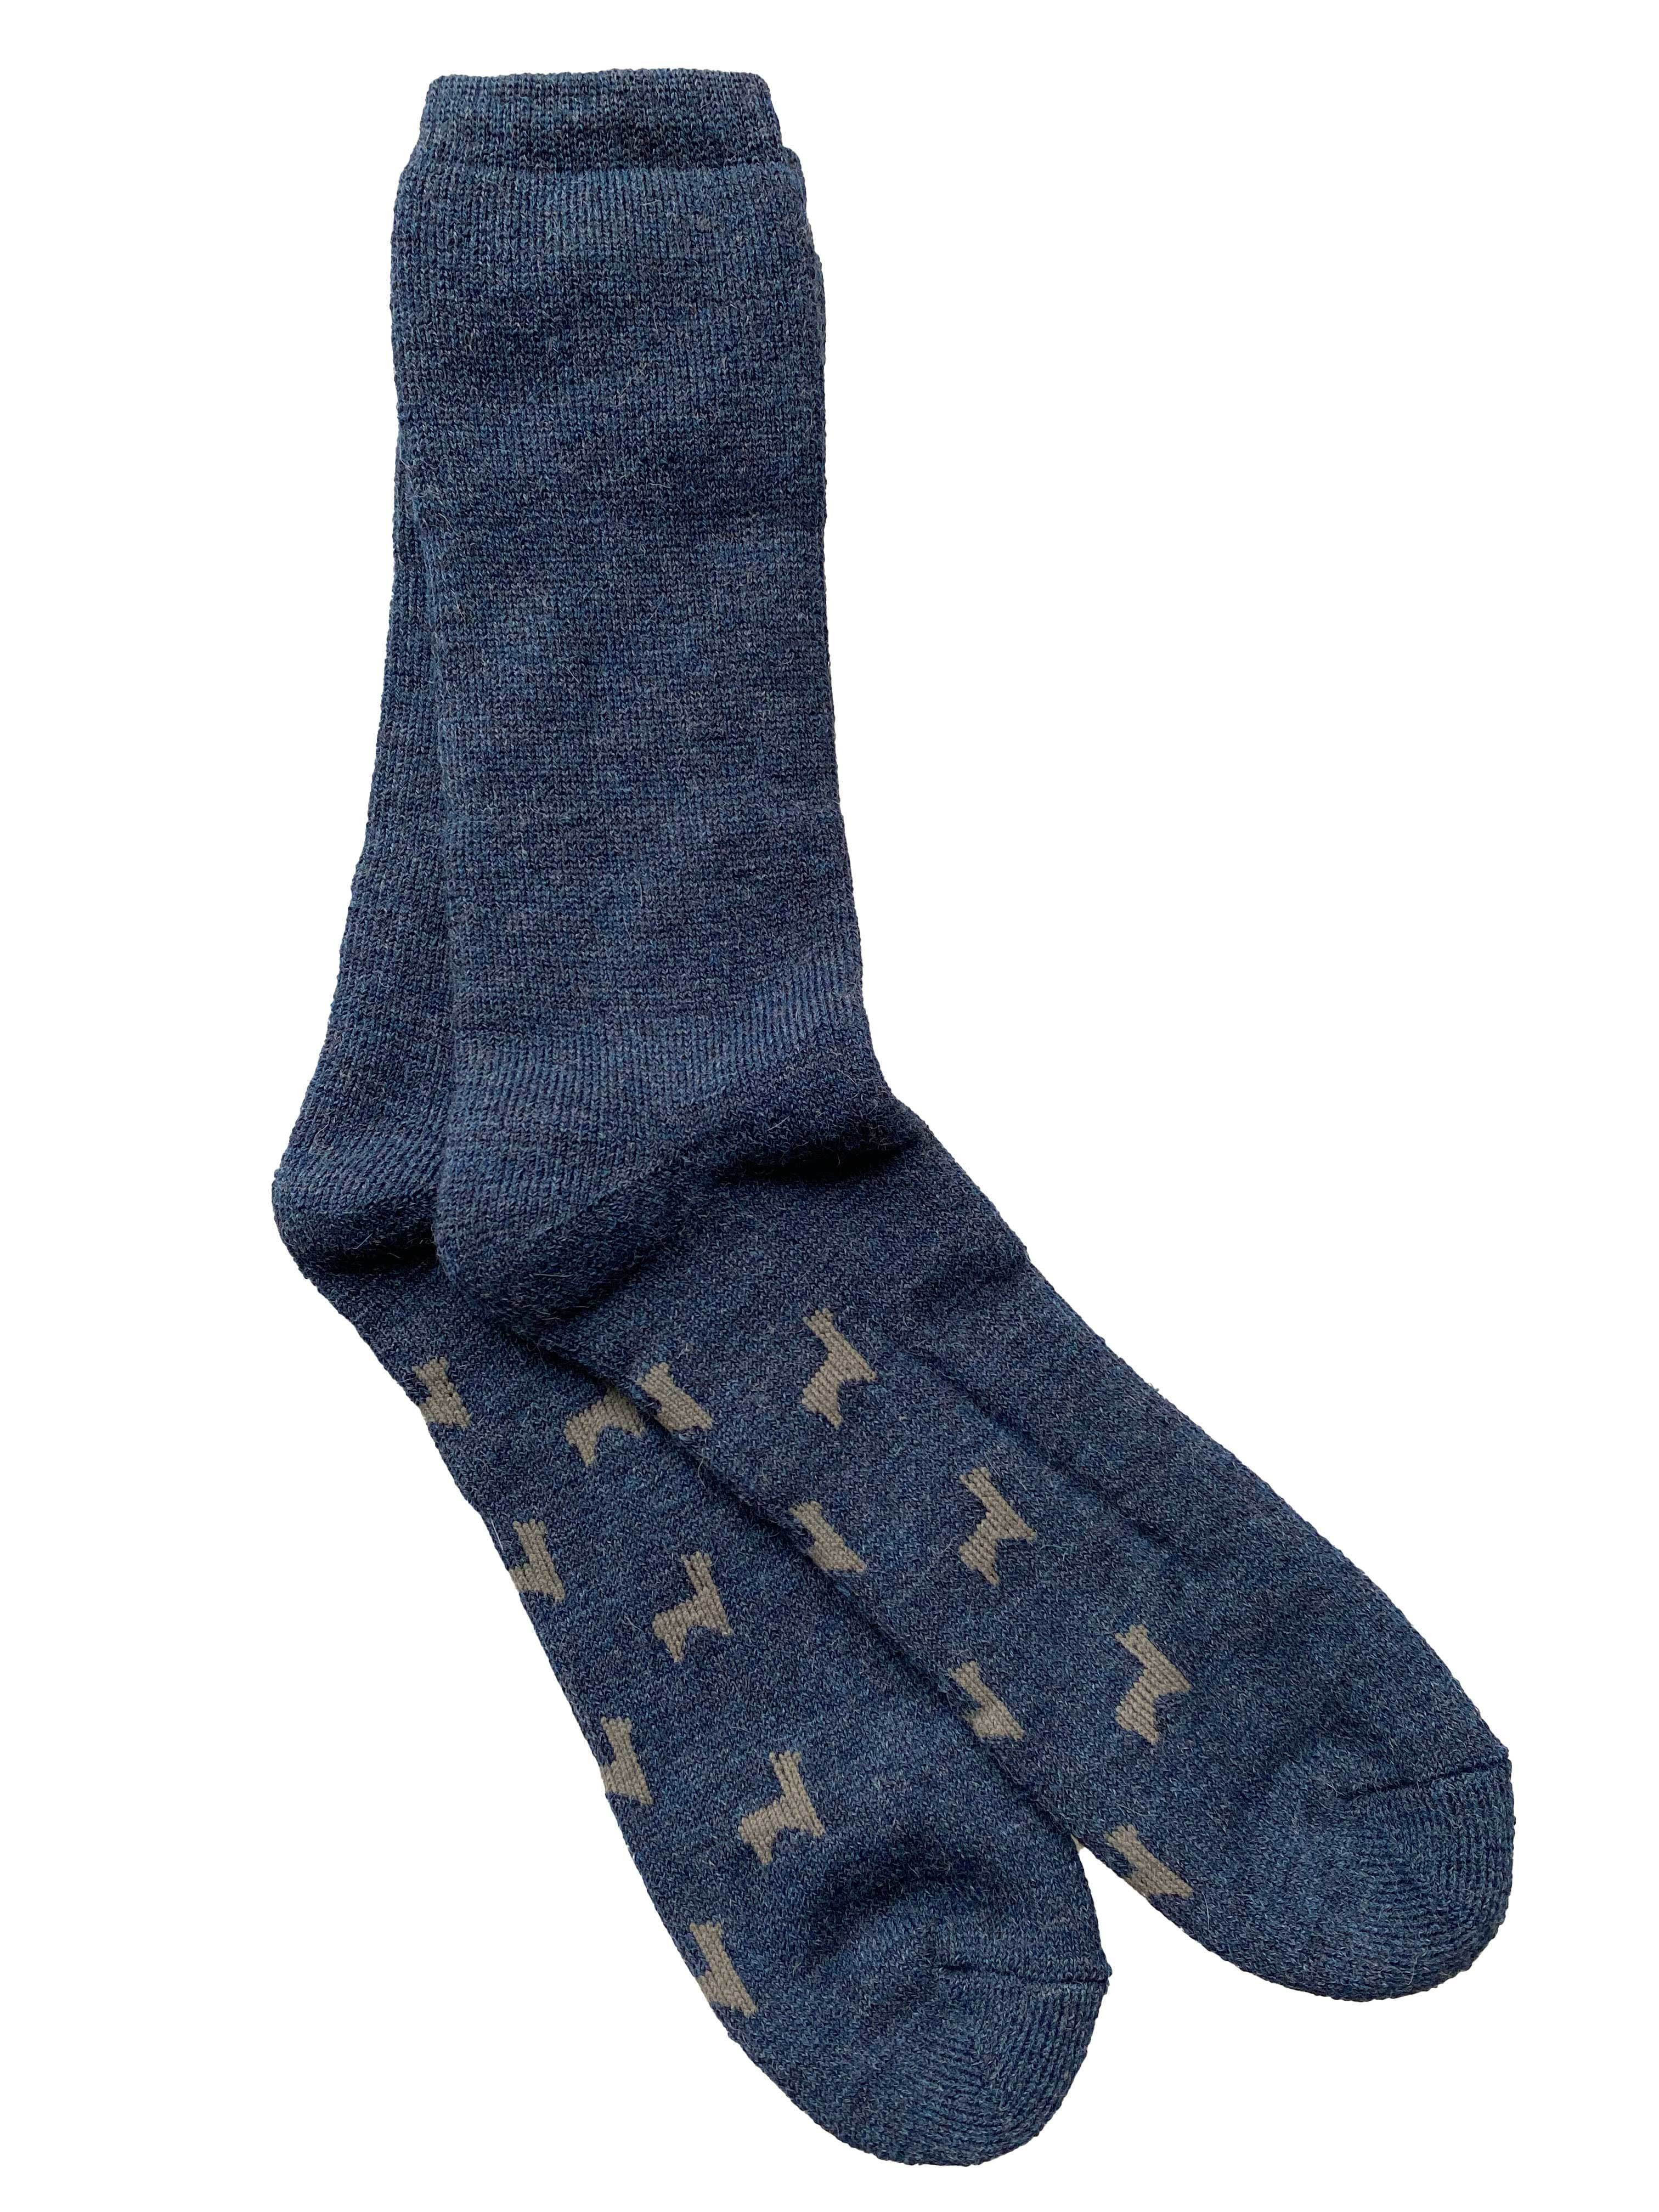 Outdoor Thick Alpaca Socks - Denim - 1